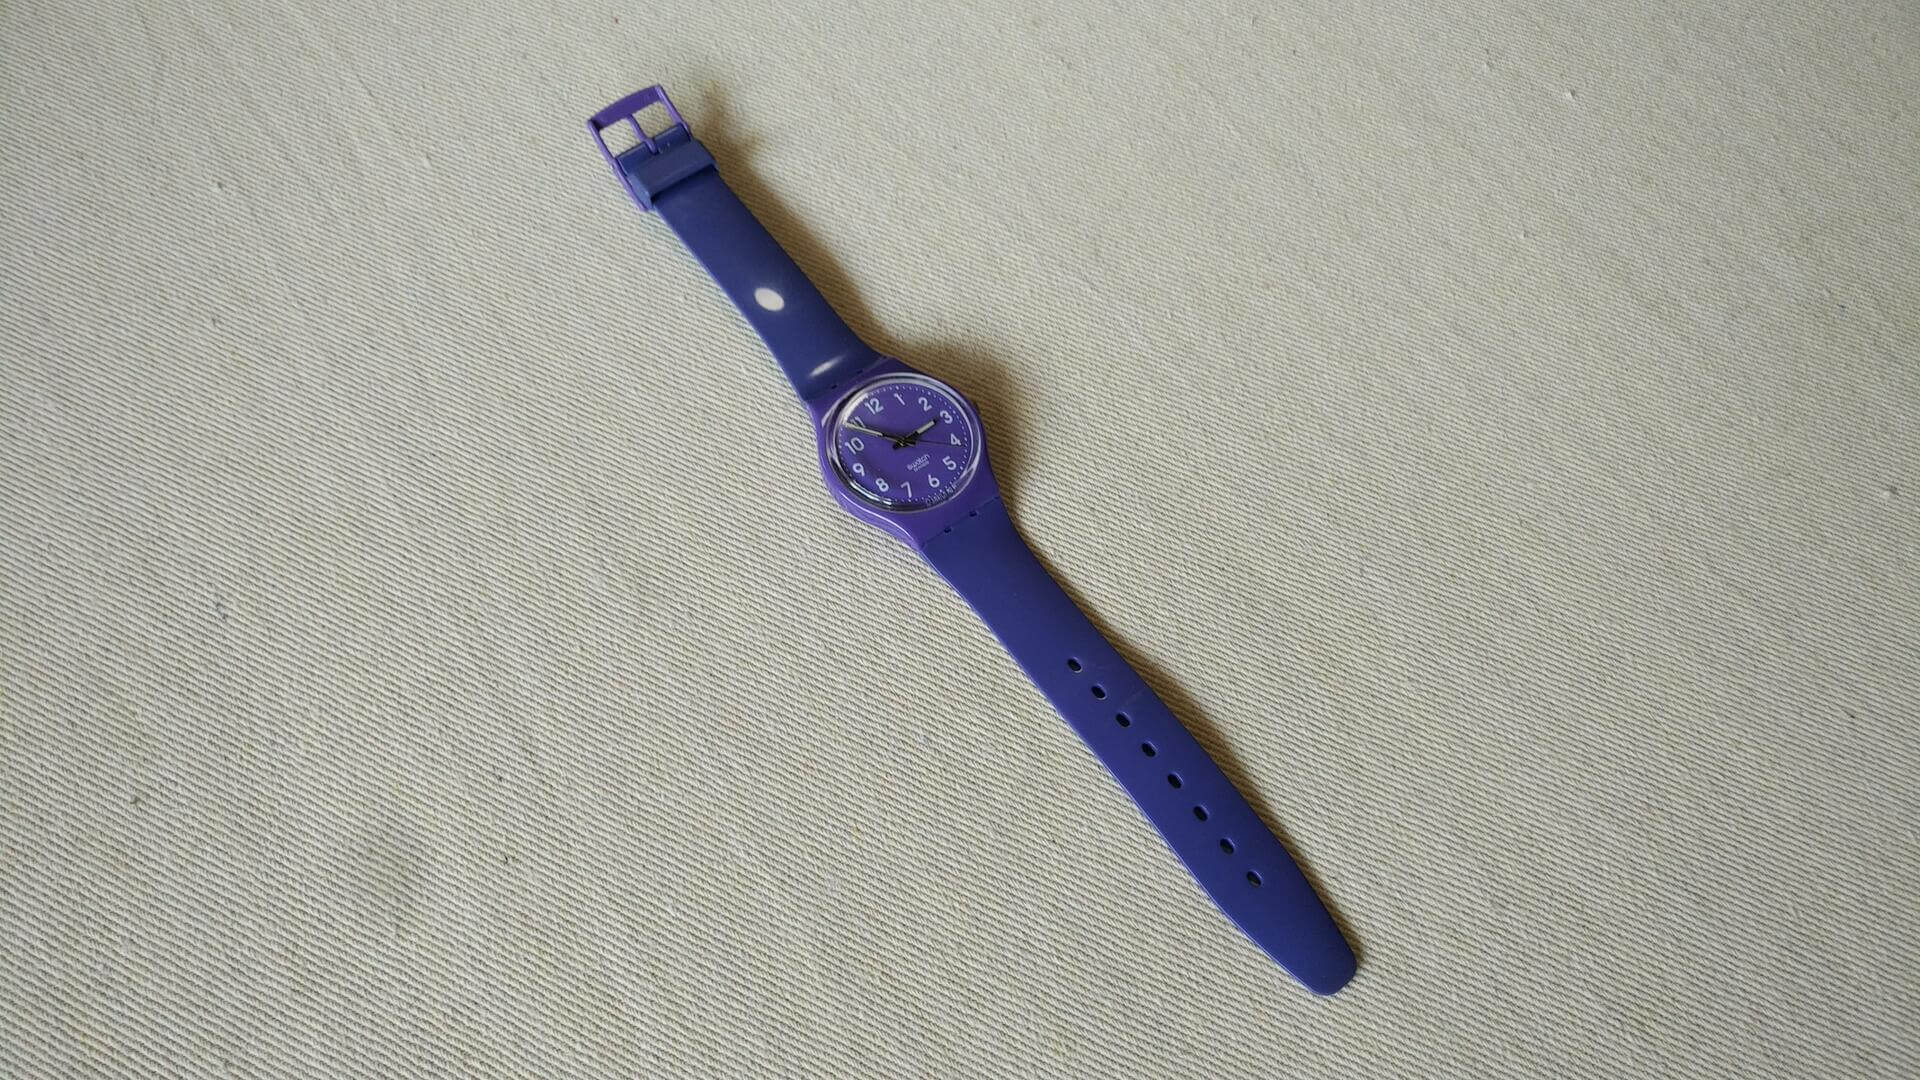 Nice purple white Swatch Wathch 2009 Callicarpa Vichy GV121 34mm diameter. Vintage made in Switzerland collectible Swatch wrist watch